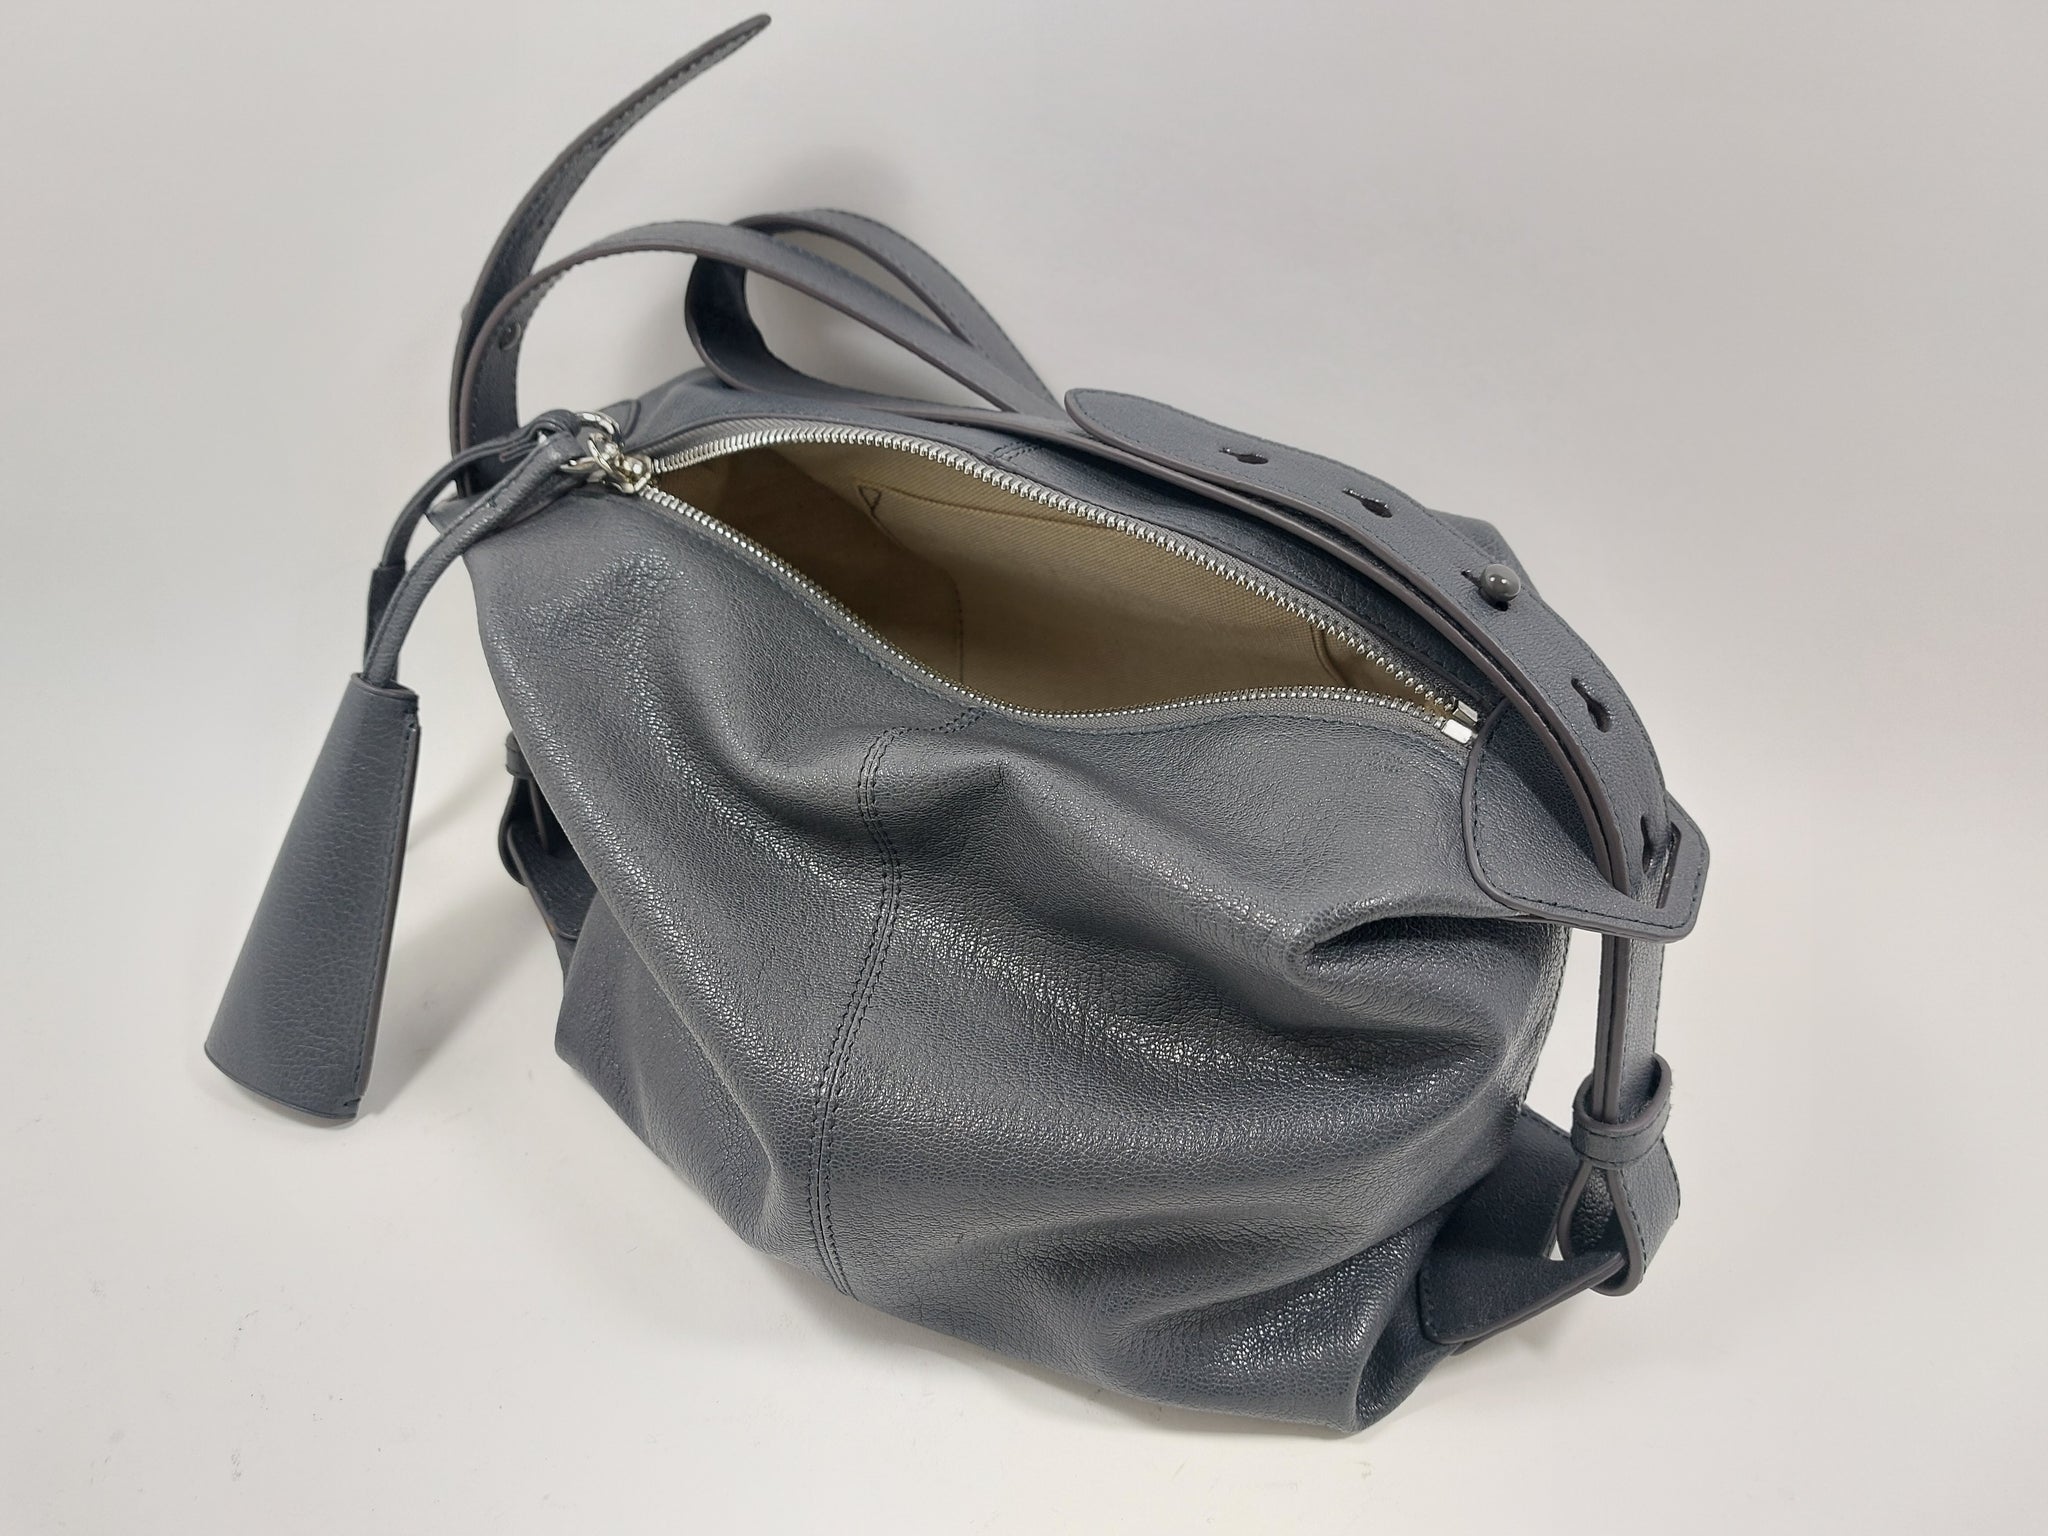 Hand bag in grey